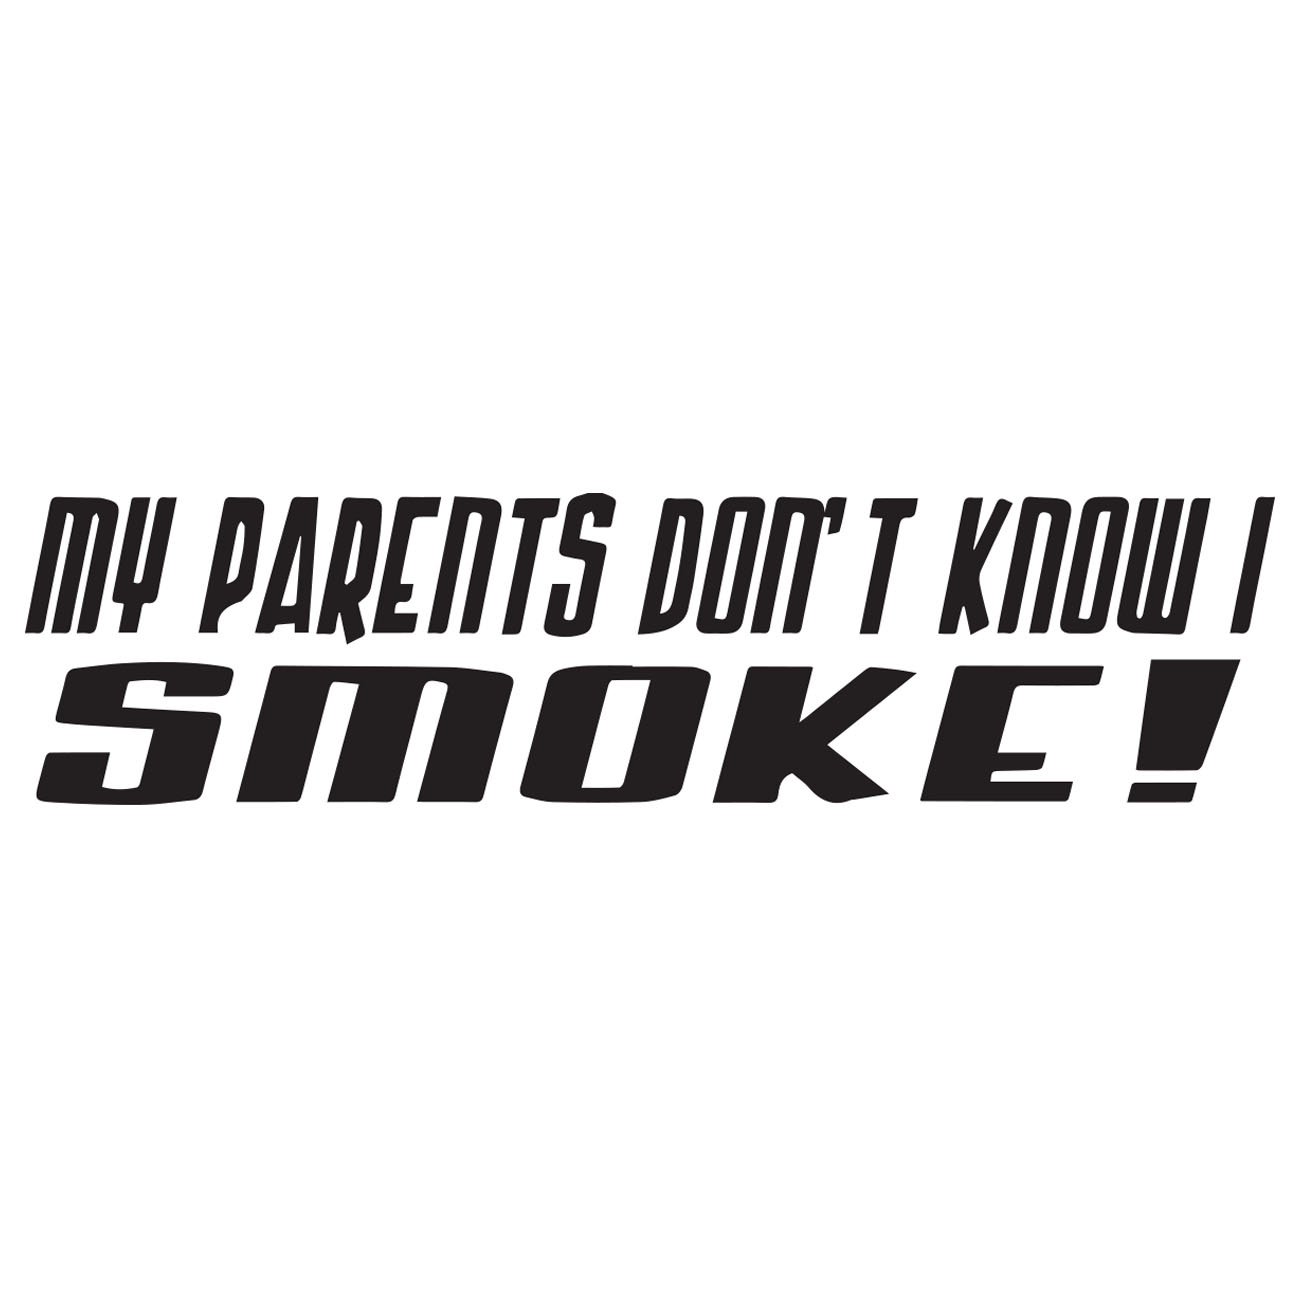 My parents dont know i smoke